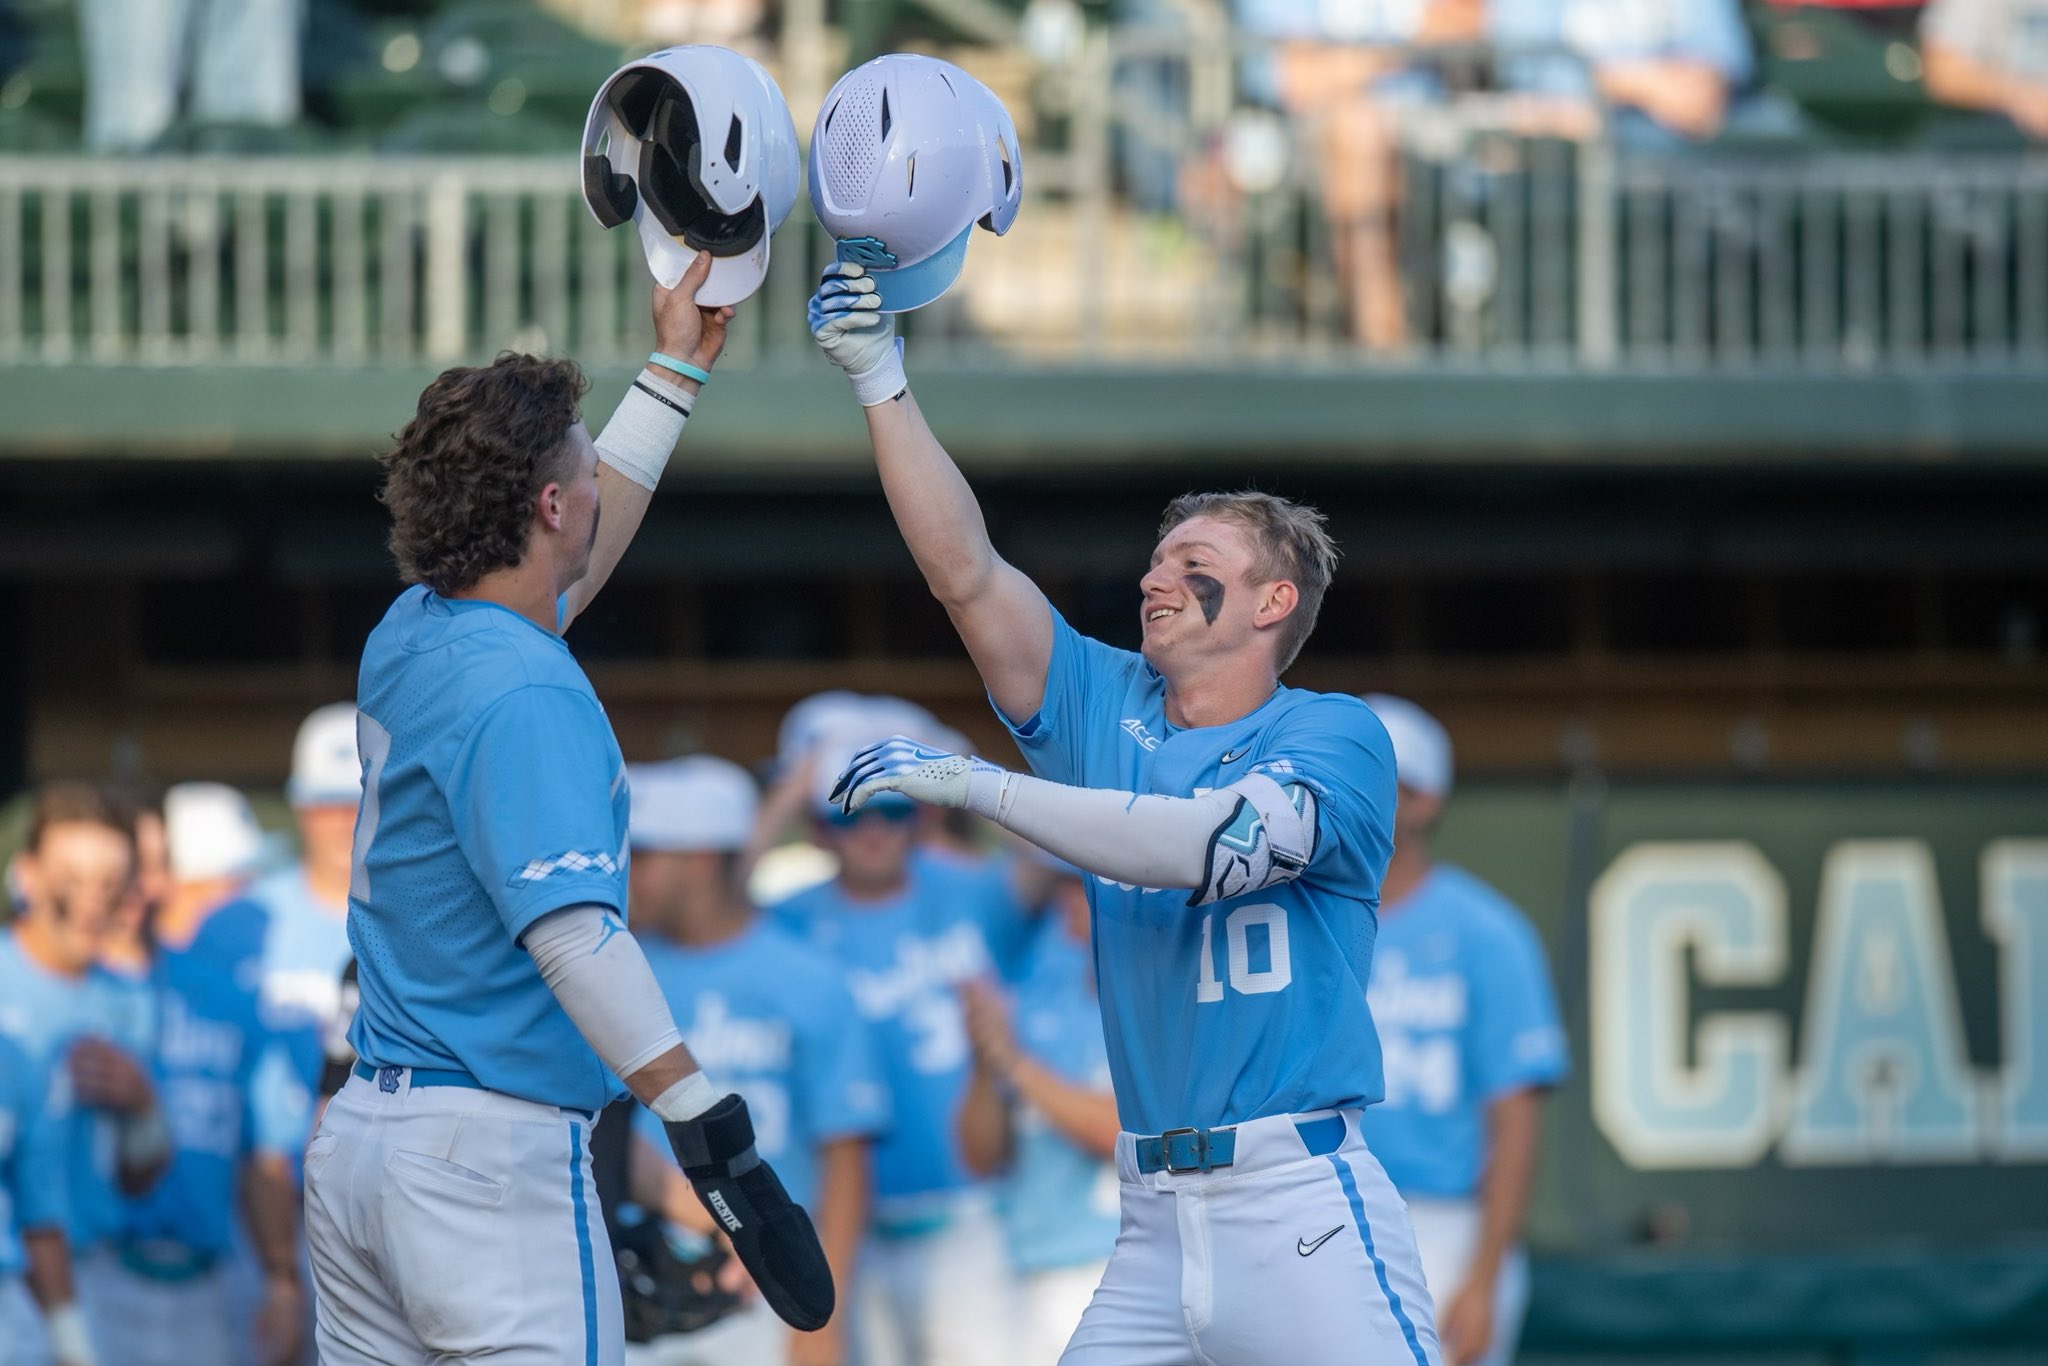 Carolina Baseball on X: UNC takes the lead with a four-run sixth